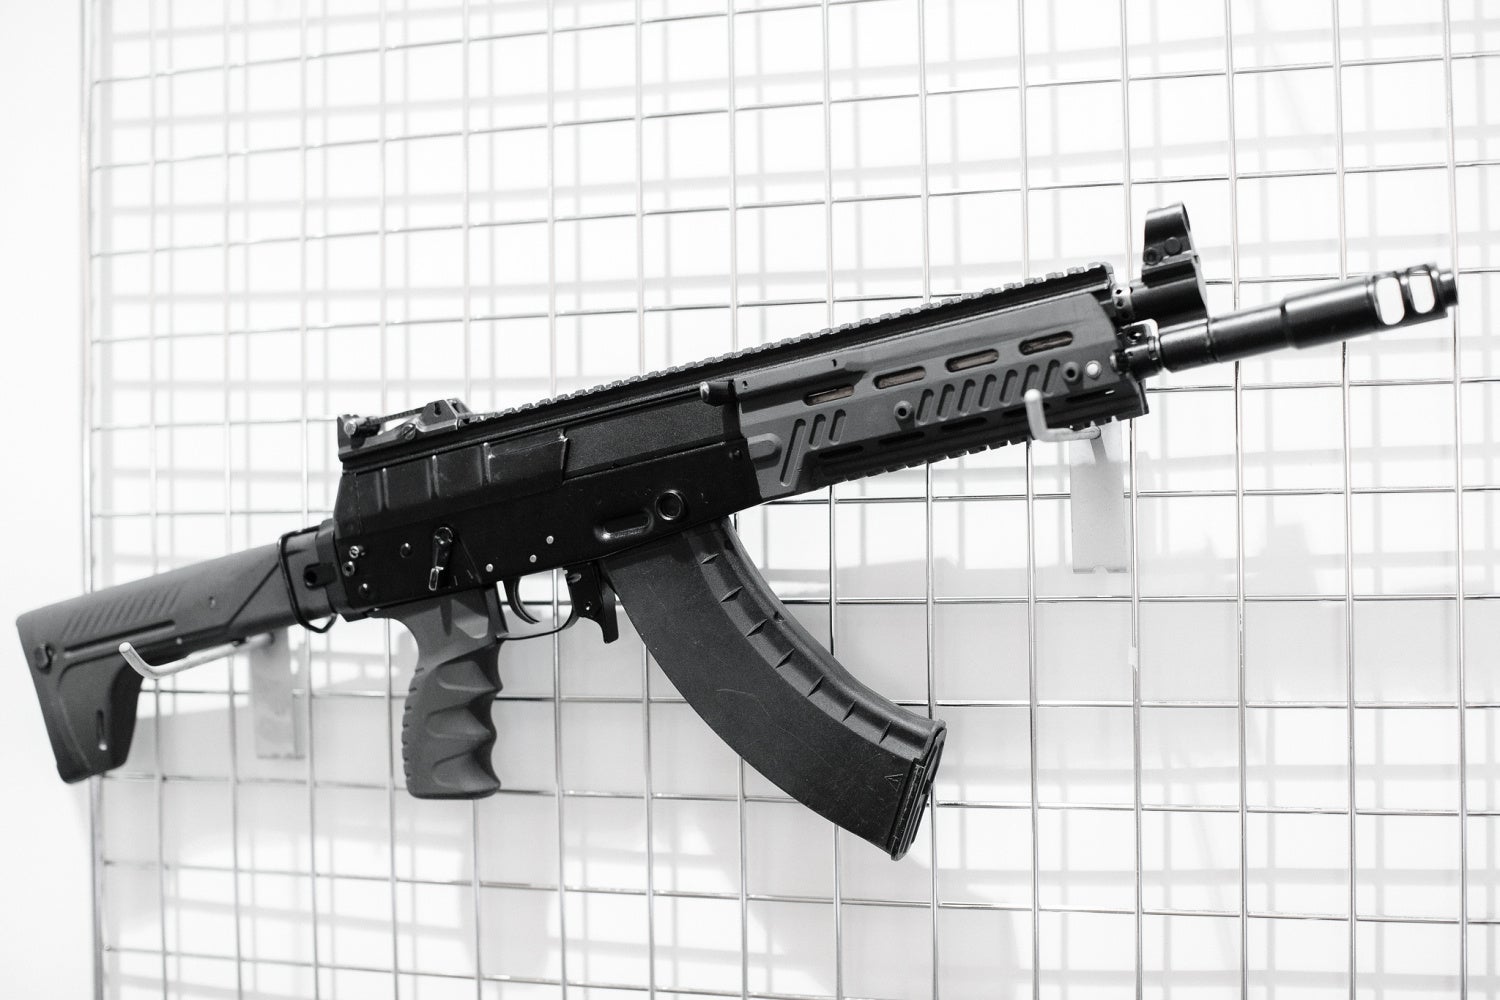 AMC-131 compact assault rifle. Photo by: Vadim Veedoff